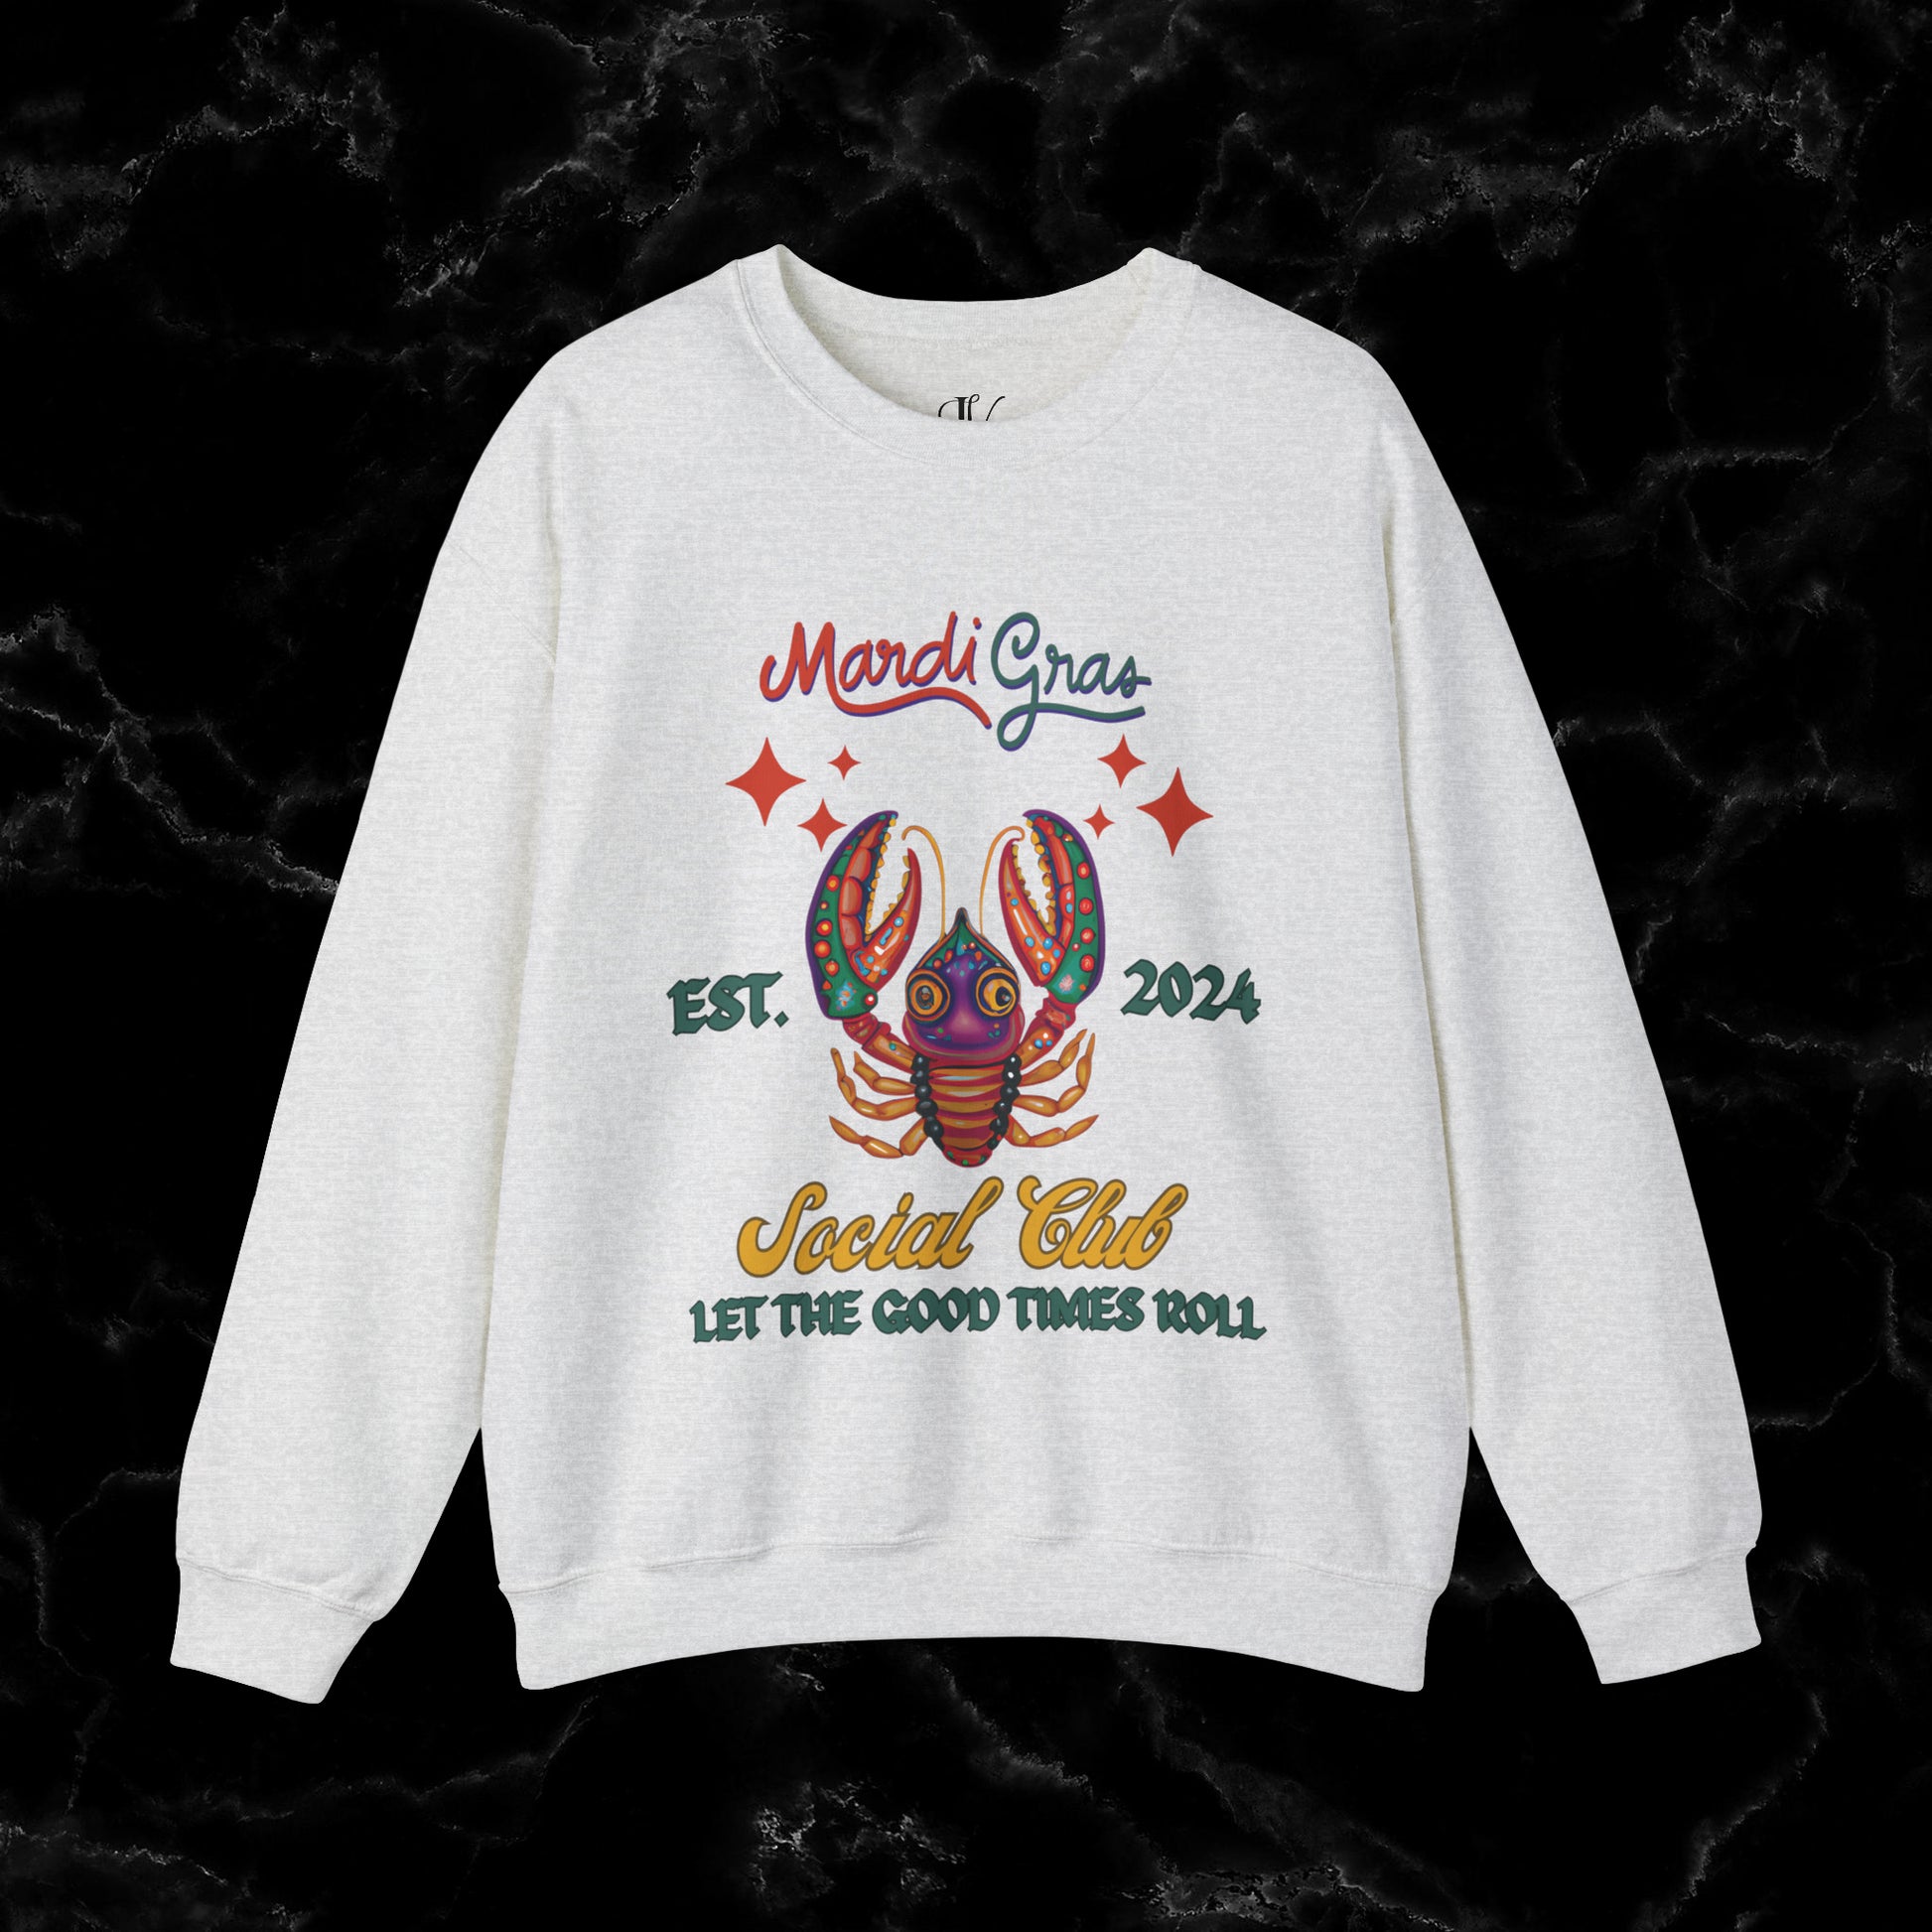 Mardi Gras Sweatshirt Women - NOLA Luxury Bachelorette Sweater, Unique Fat Tuesday Shirt, Louisiana Girls Trip Sweater, Mardi Gras Social Club Style Sweatshirt S Ash 